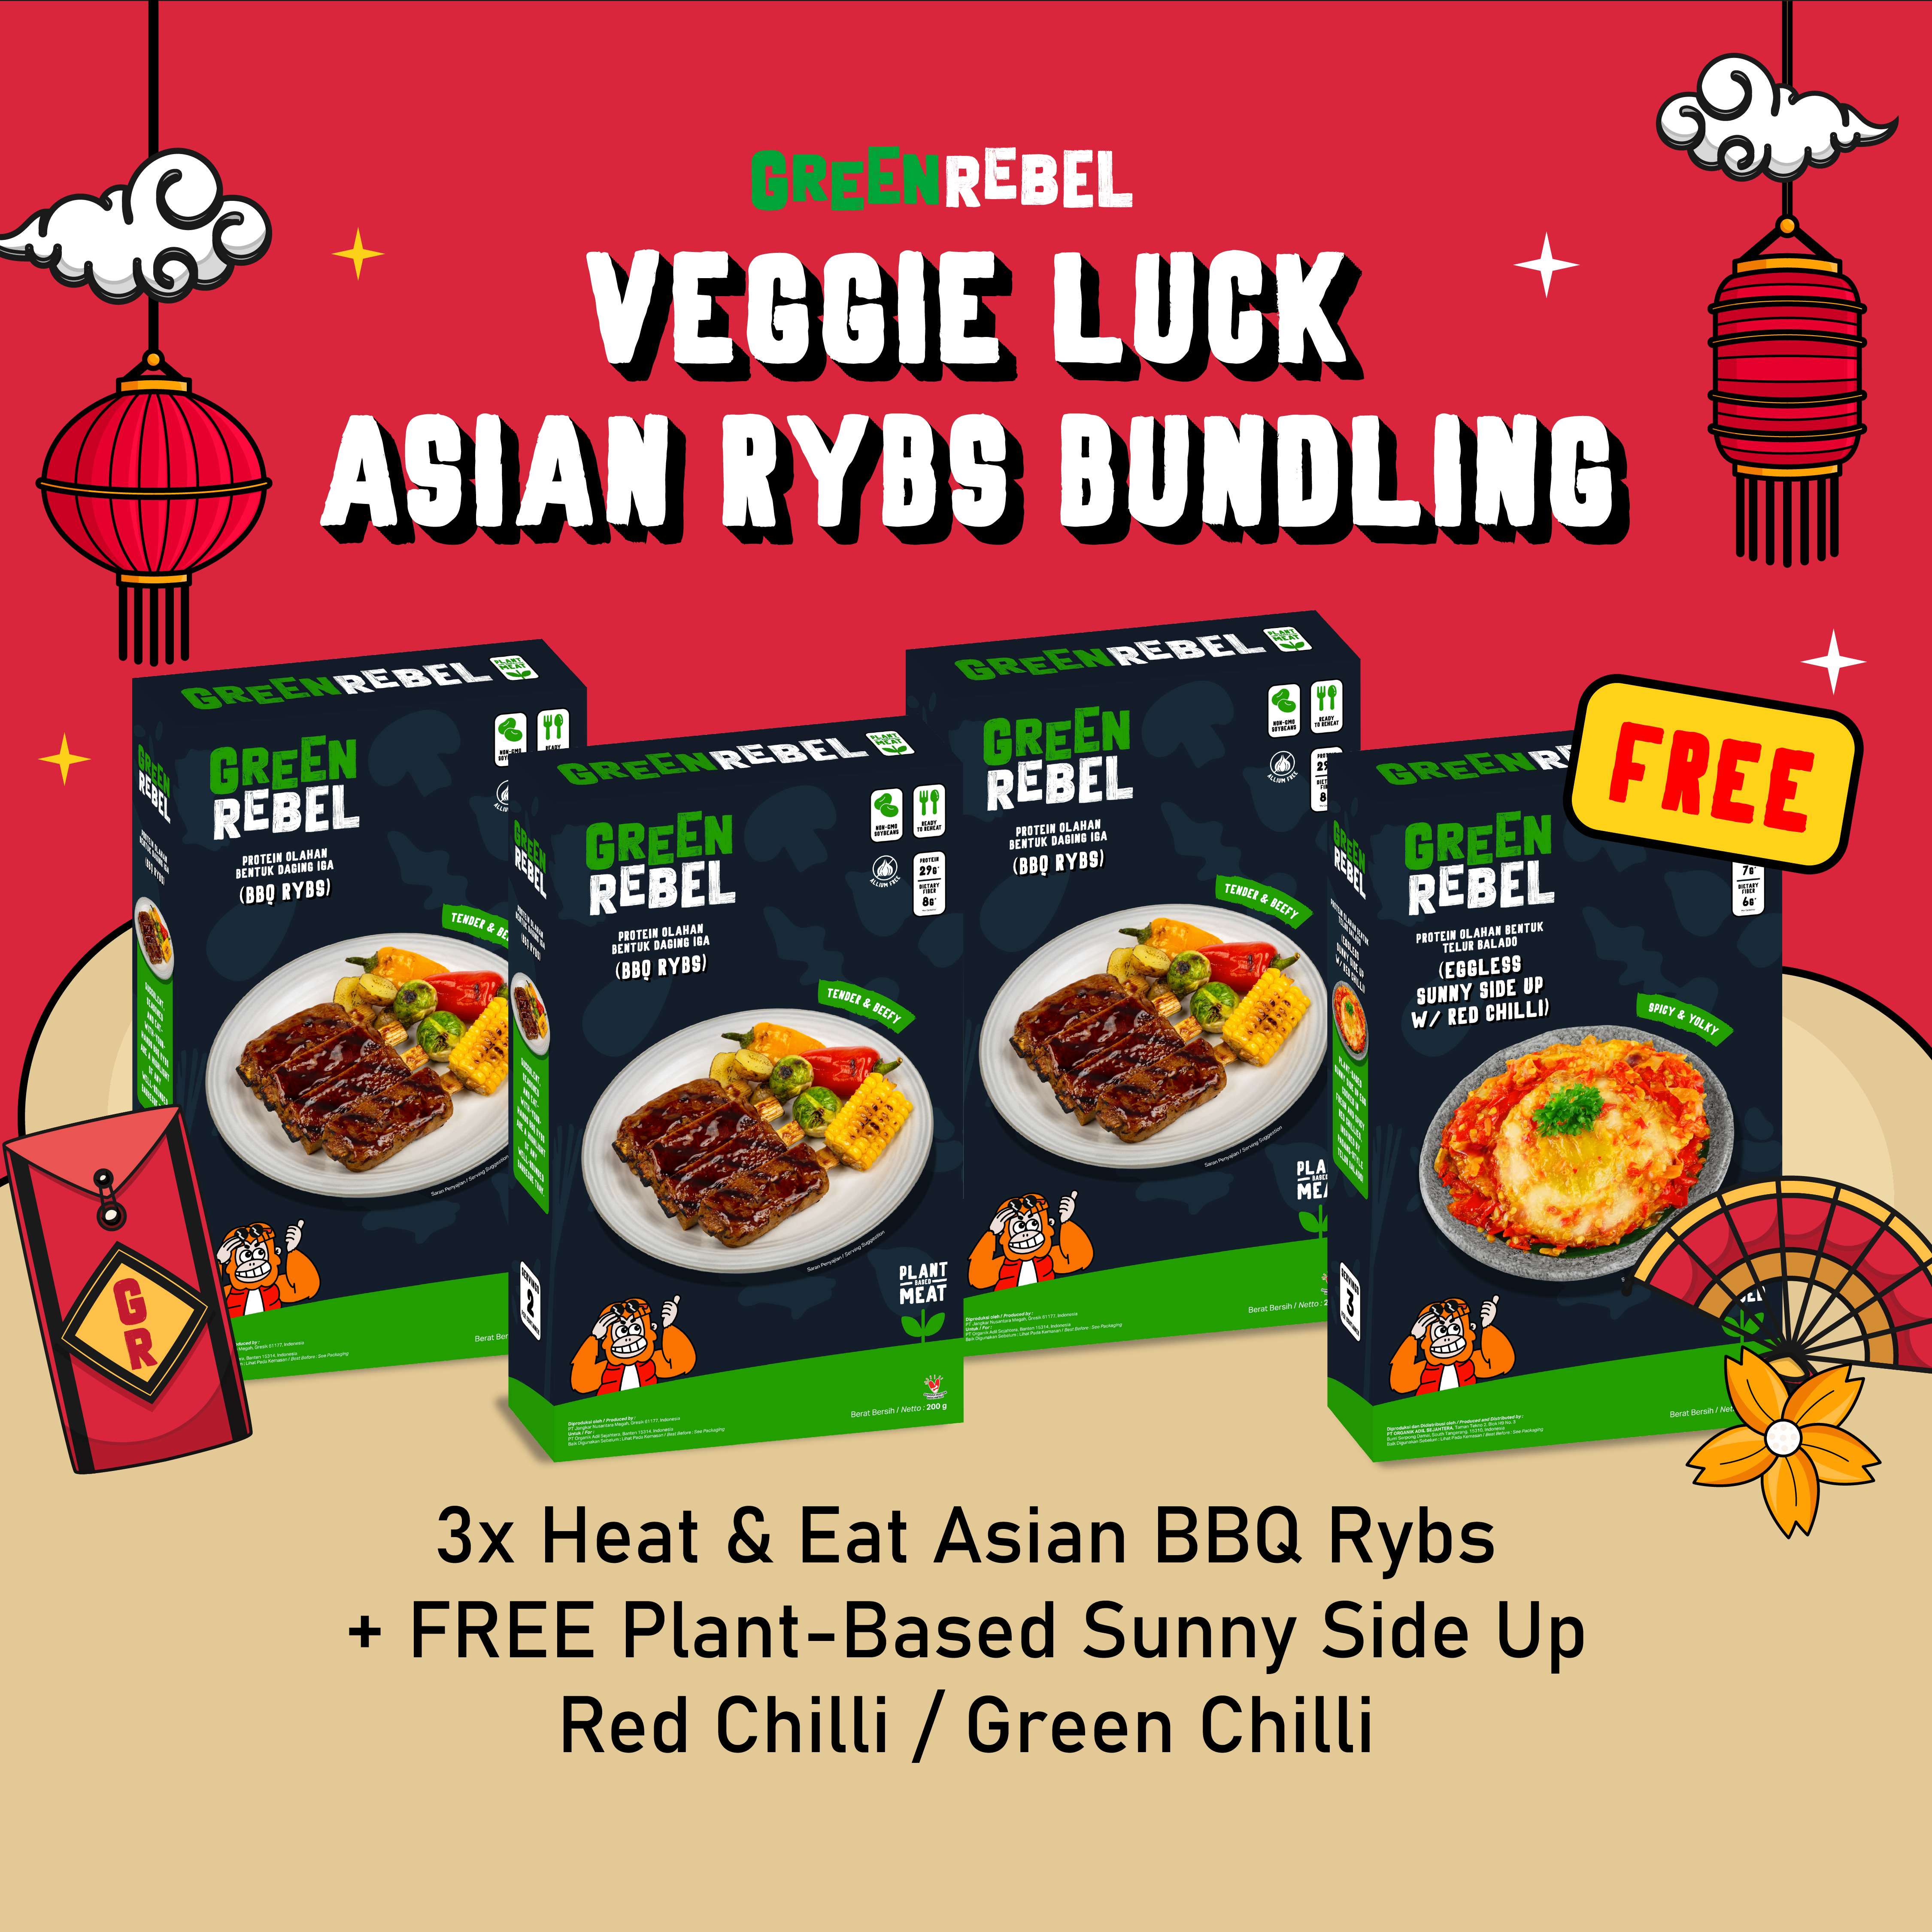 CNY Veggie Luck Asian Rybs Bundling